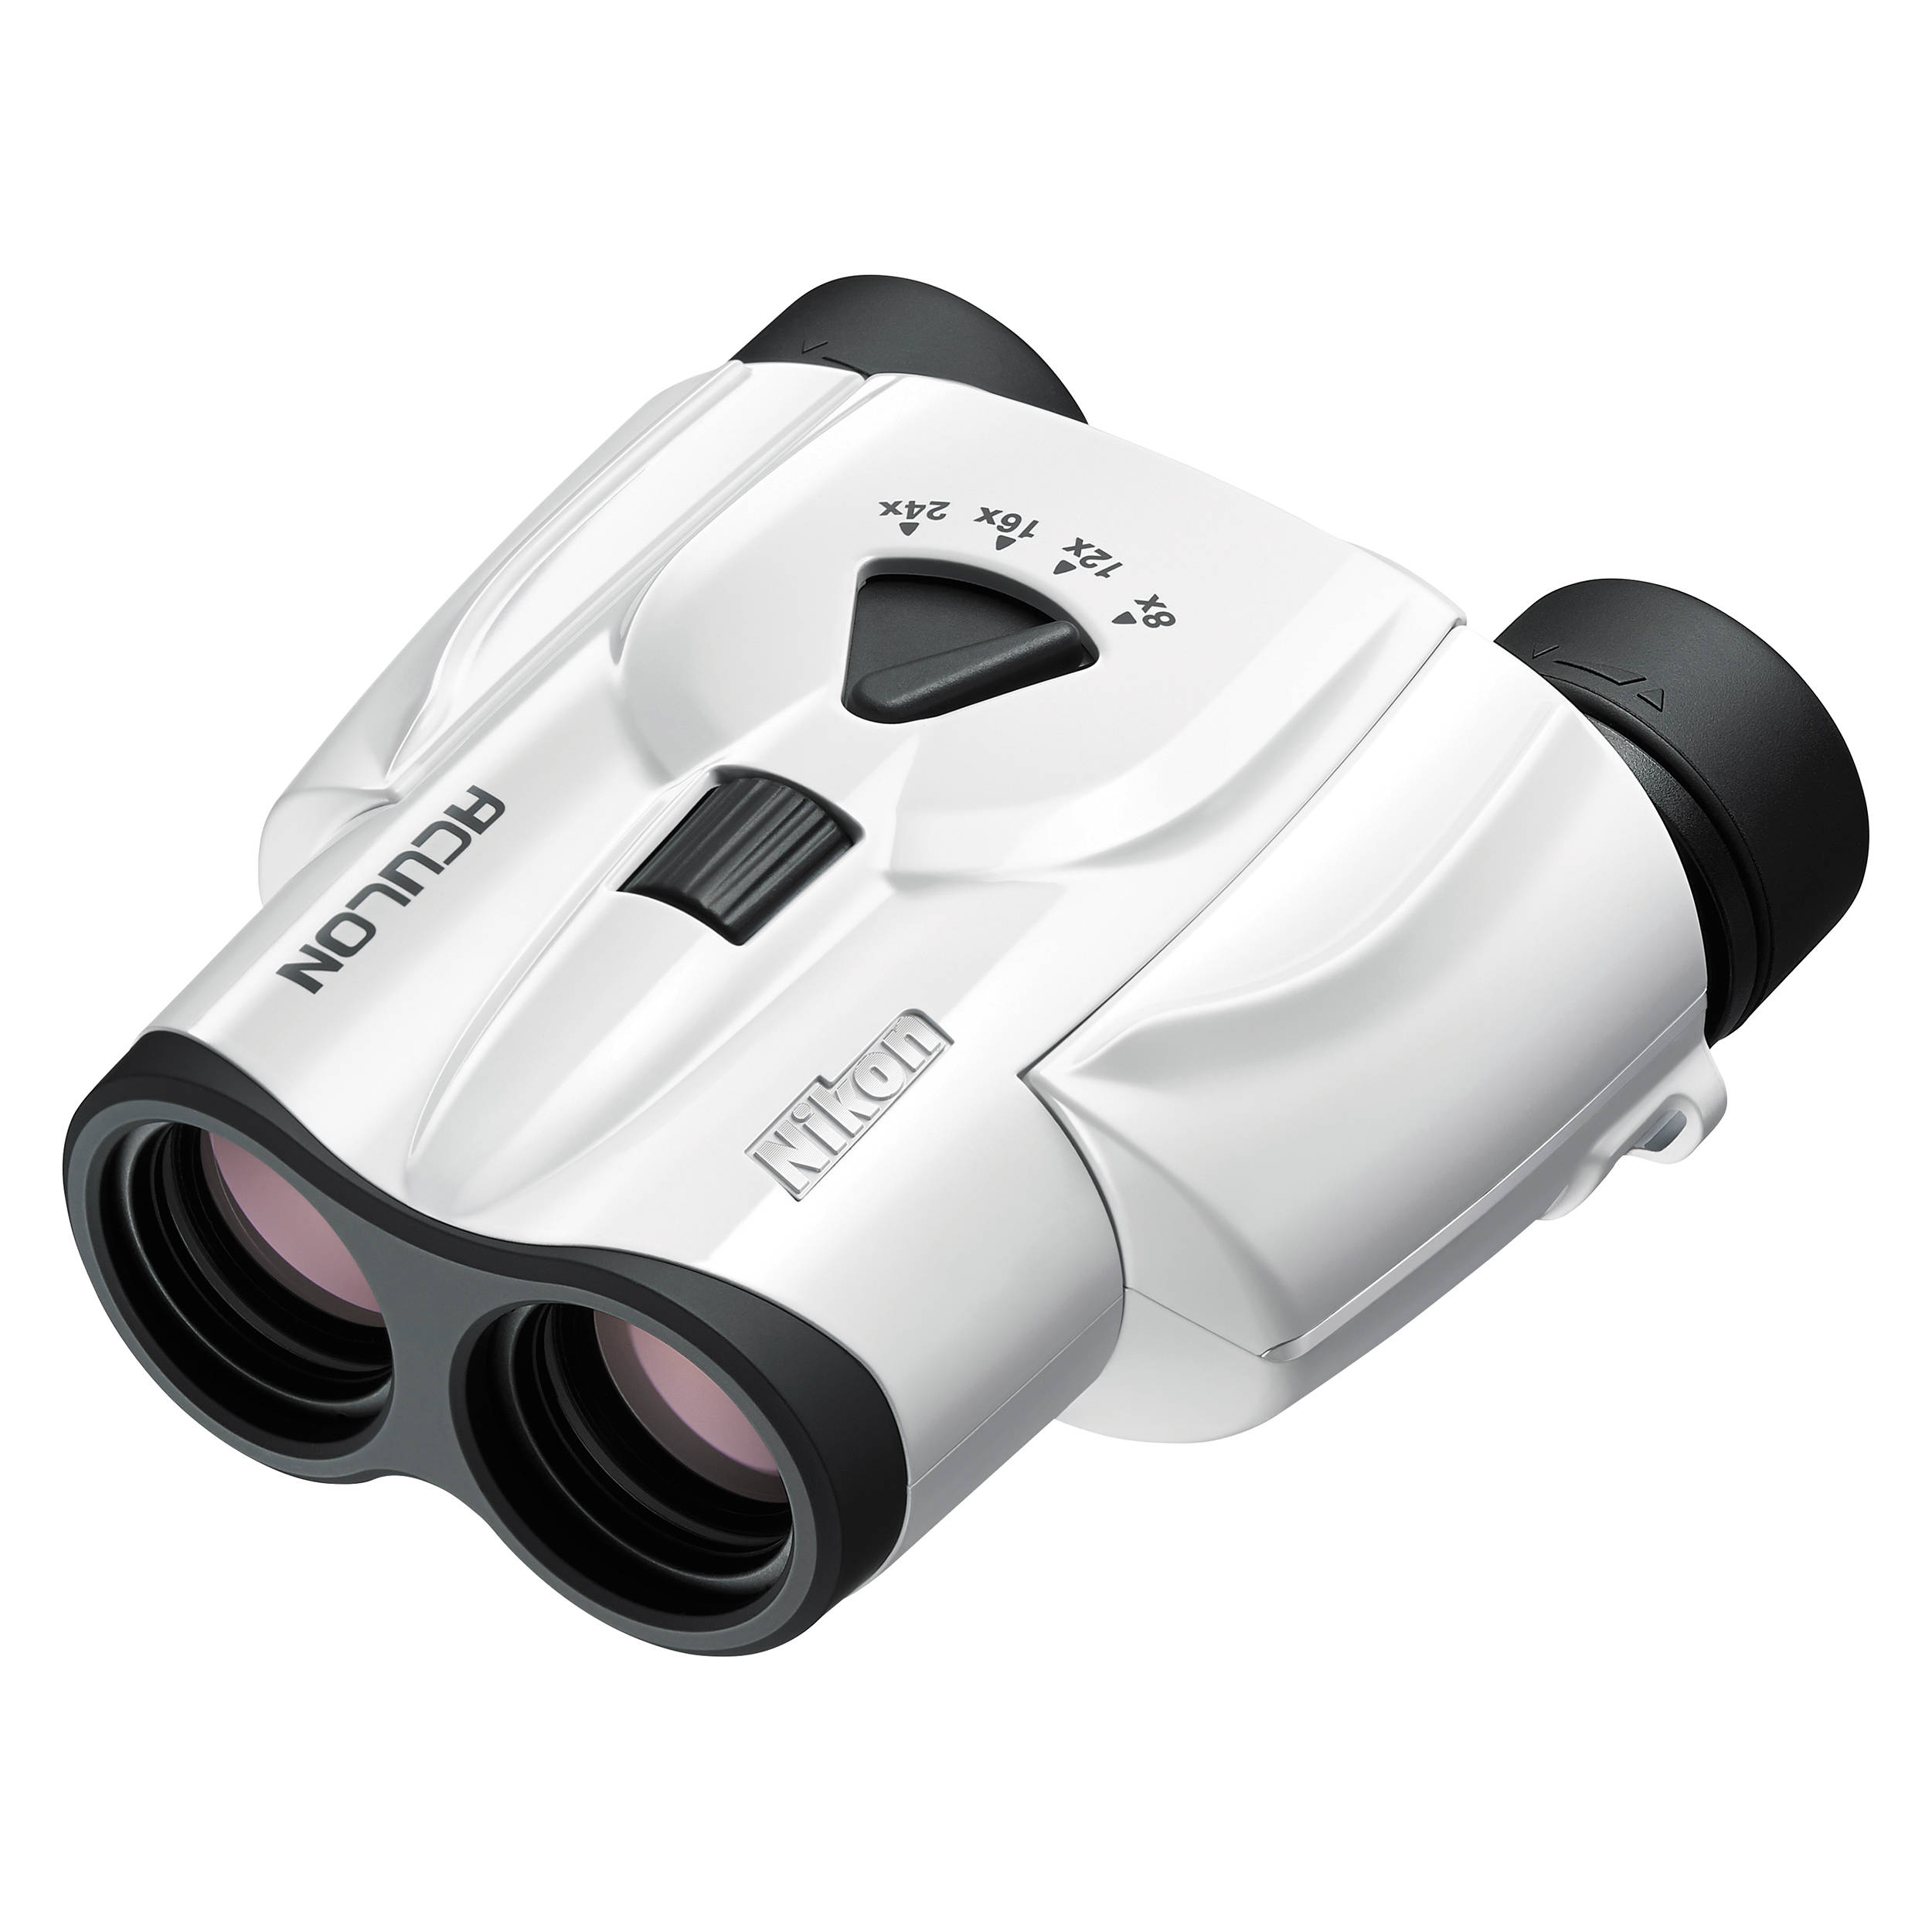 Nikon 8-24x25 Aculon T11 Zoom Binoculars (White) 16008 B&H Photo